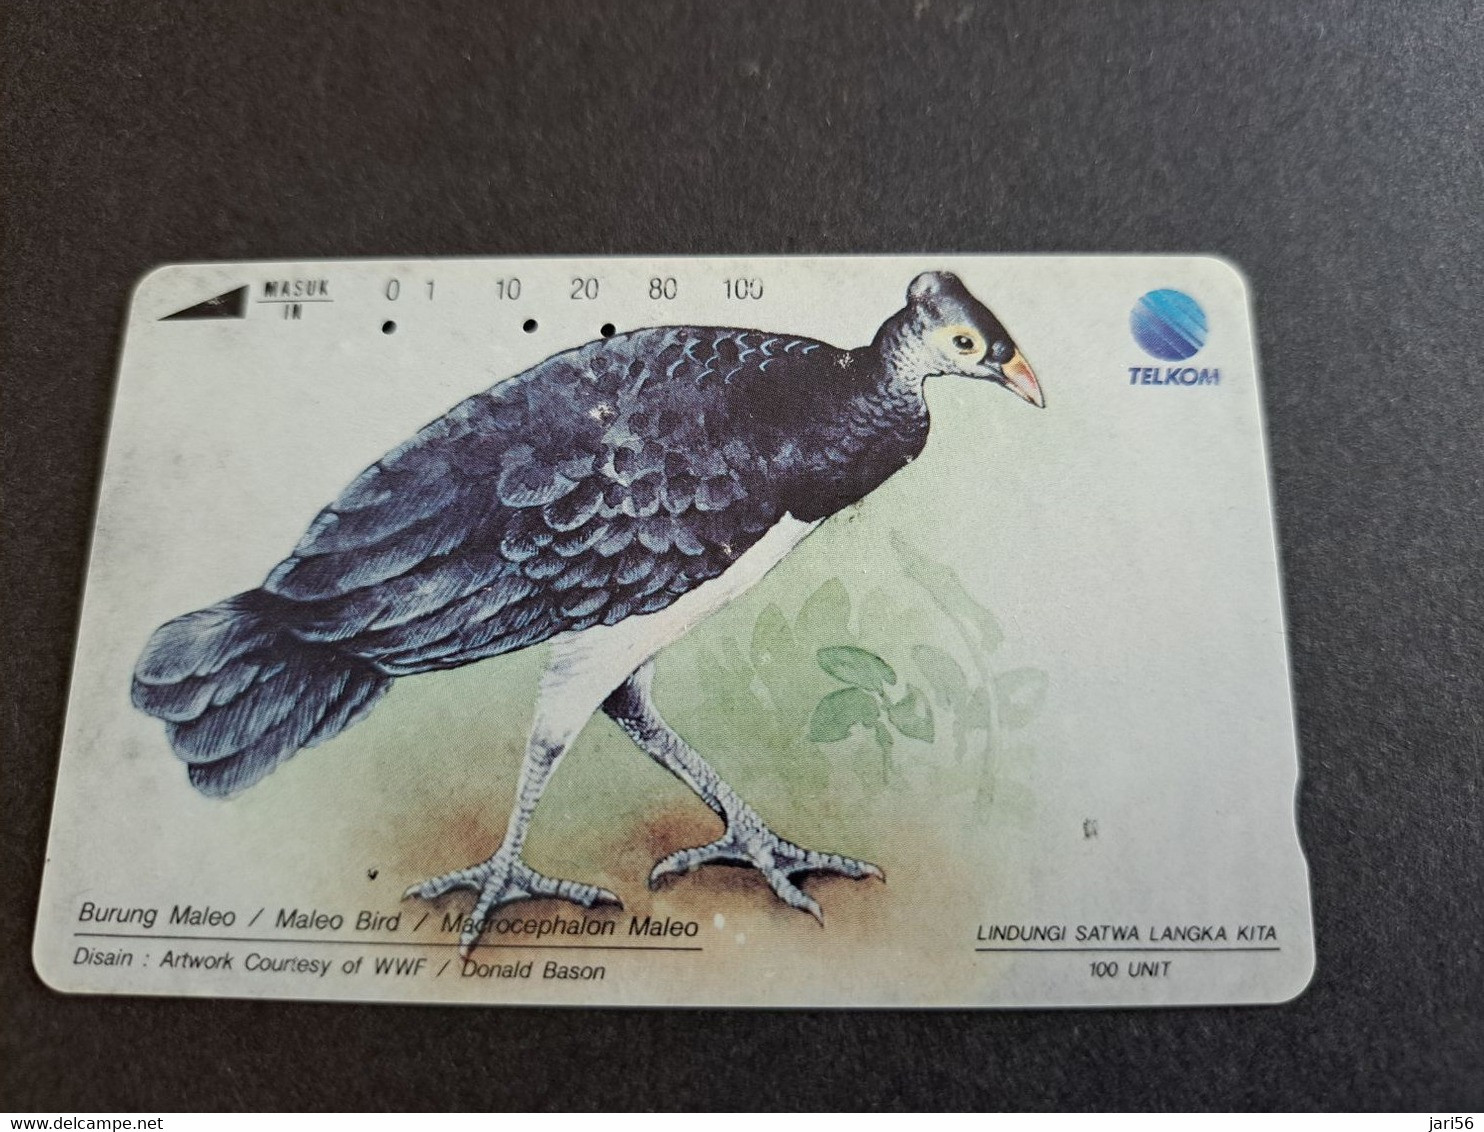 INDONESIA MAGNETIC/TAMURA  100 UNITS /  UNITS  MALEO BIRD   MAGNETIC   CARD    **9769** - Indonesia